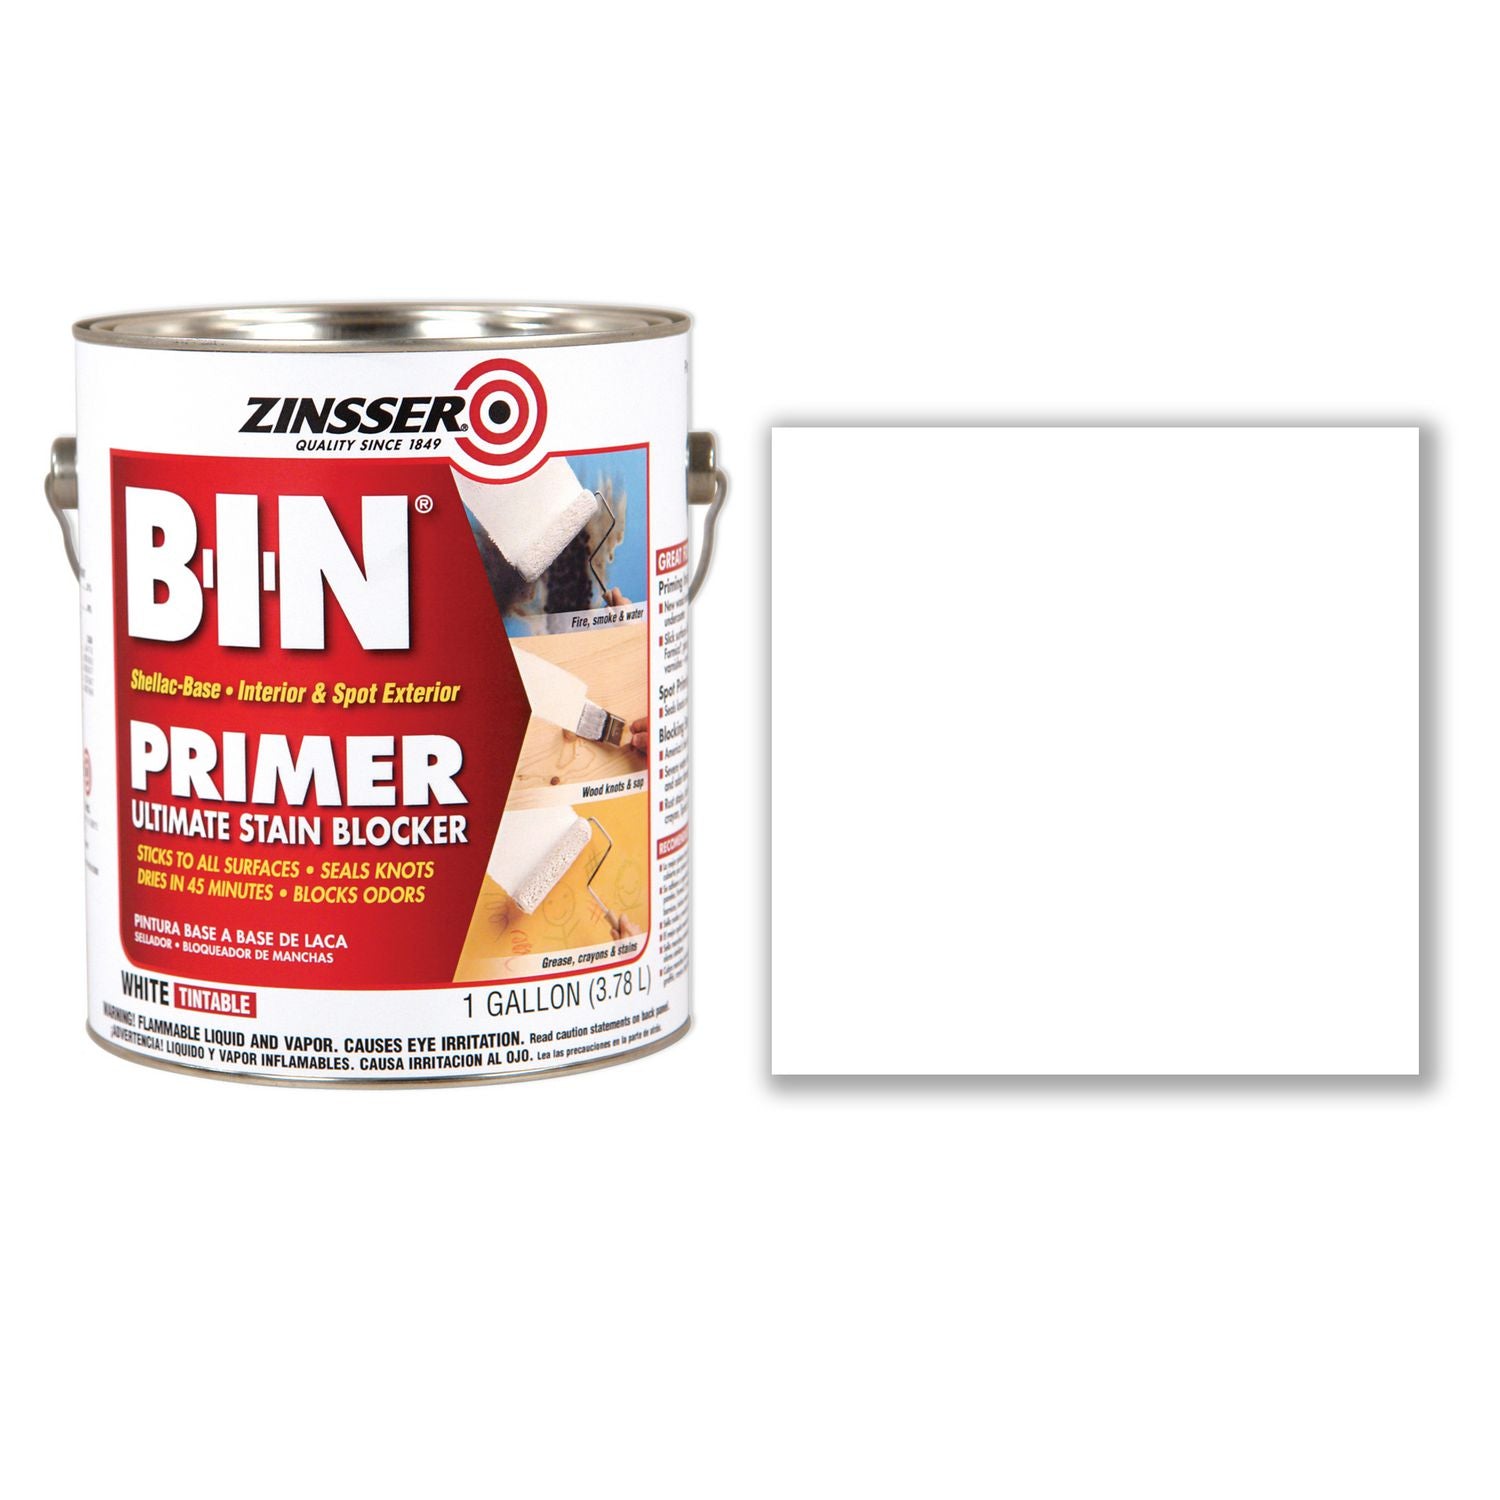 bin-shellac-base-interior-and-spot-exterior-primer-flat-white-1-gal-bucket-pail-2-carton_rst320991ct - 2